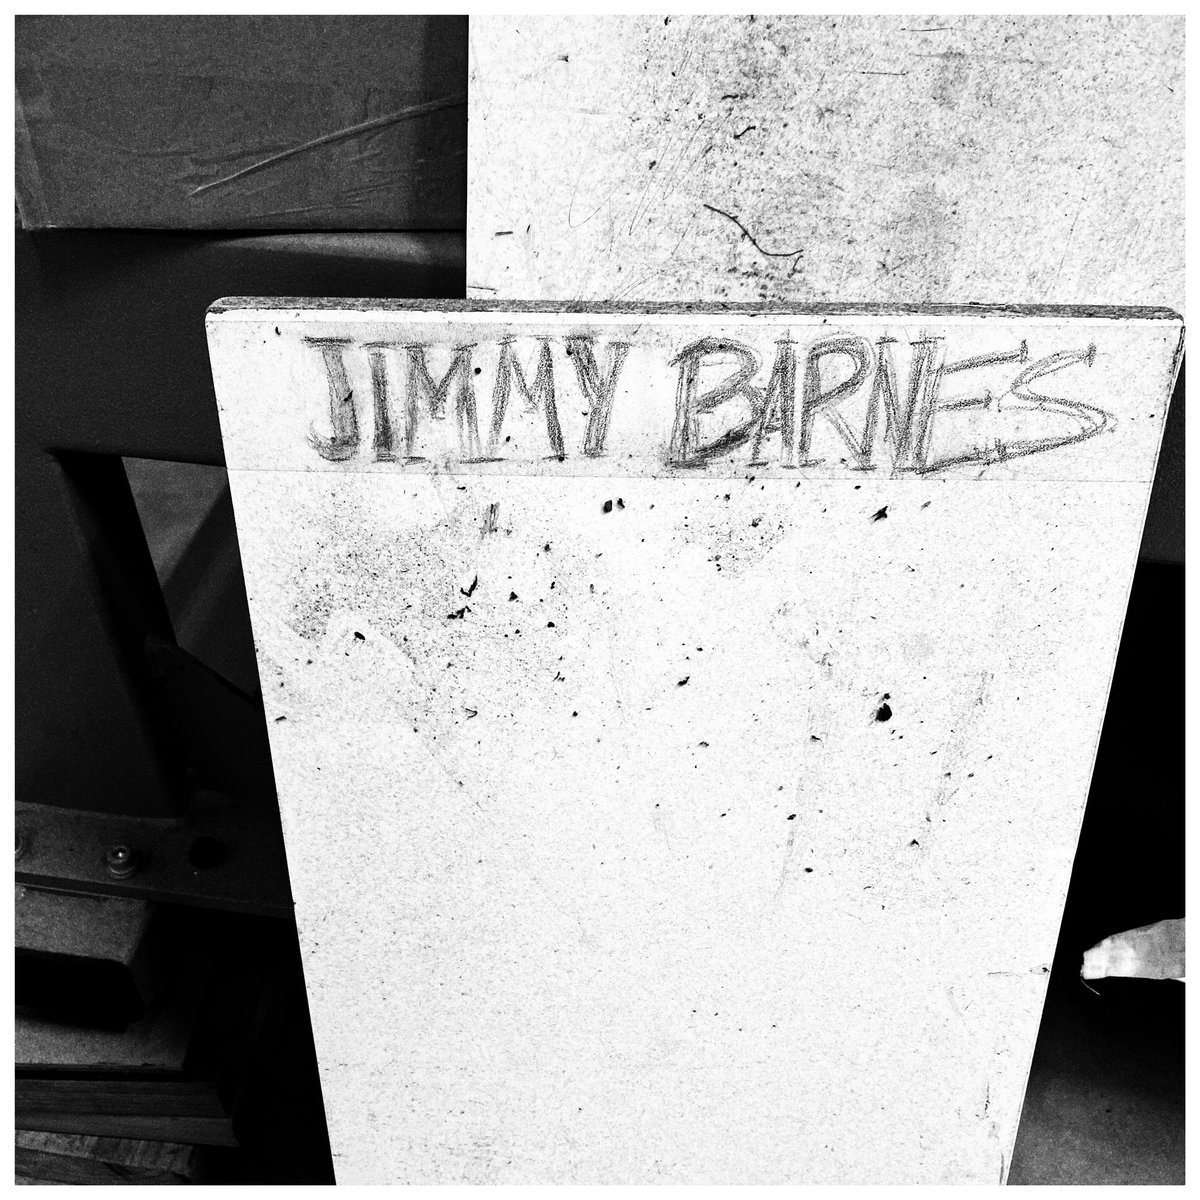 Jimmy Barnes

#photo #photography #photooftheday #albumcoverart #albumcoverdesign #blackandwhitephotography #conceptualphotography